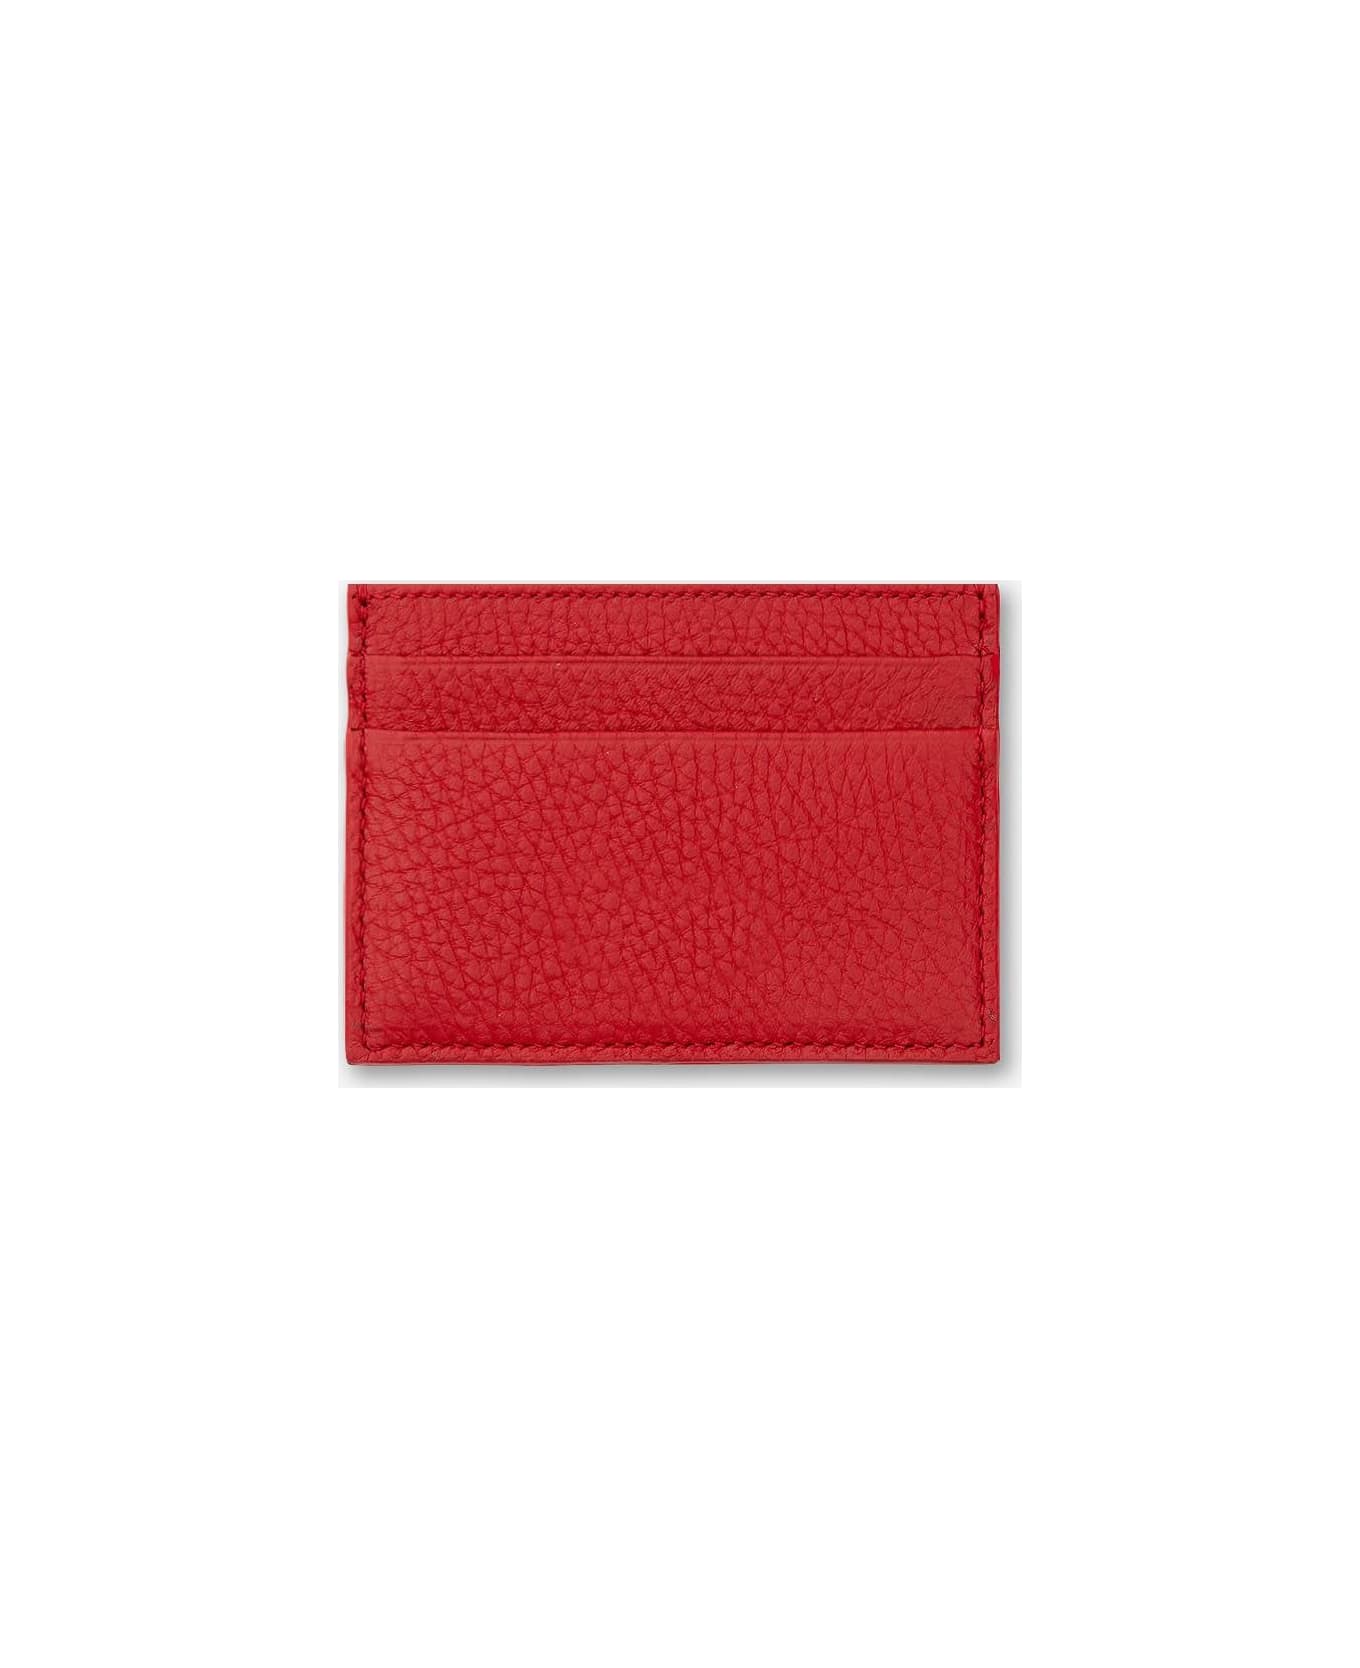 Larusmiani Card Holder 'yield' Wallet - Red